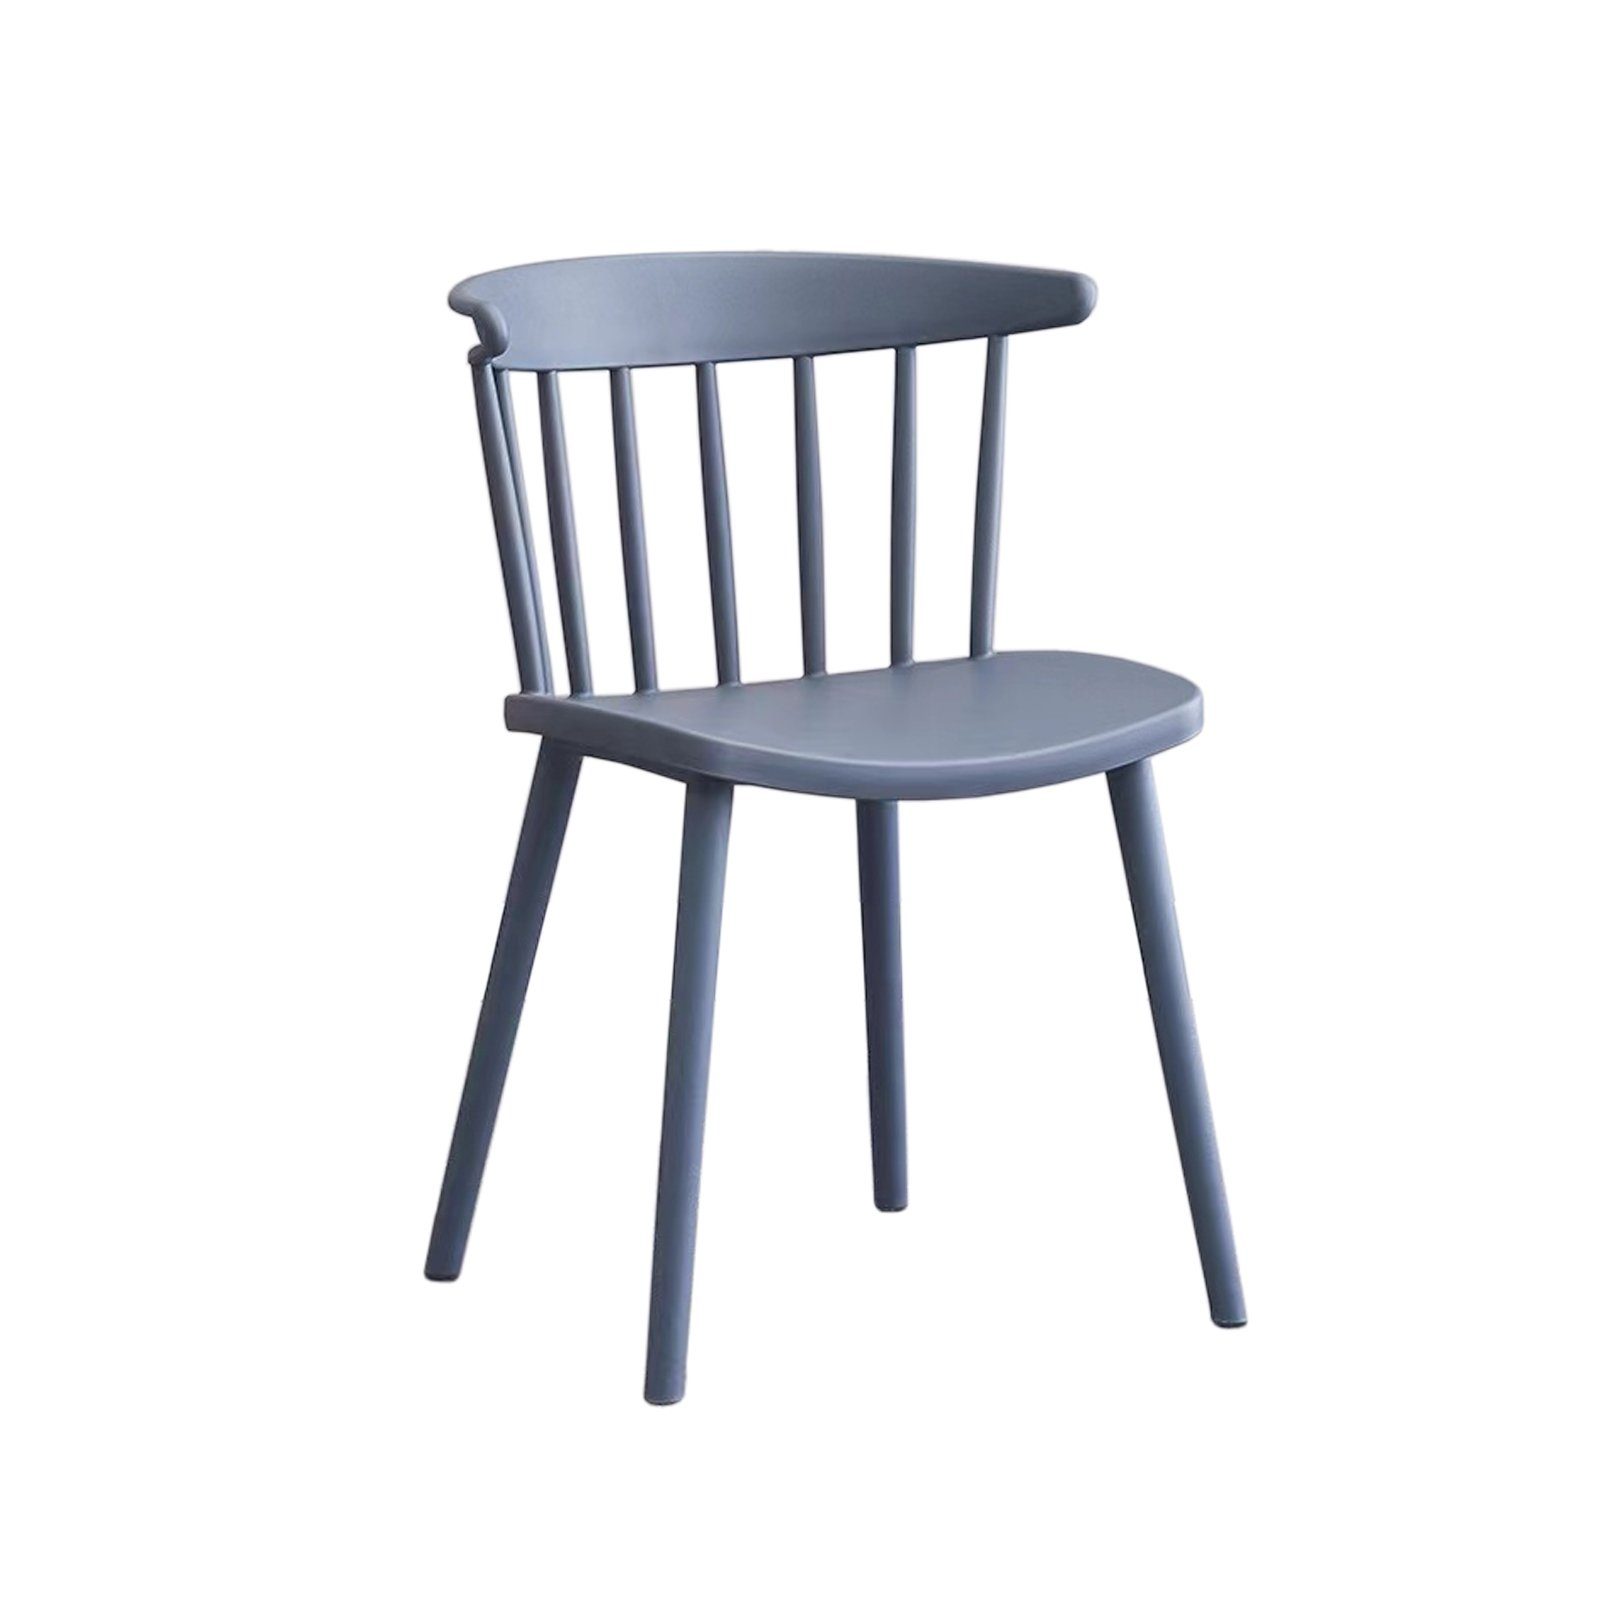 Grau Kunststoffstuhl St), (Stück, Küchenstuhl Esszimmerstuhl 1 HTI-Living Tovik Bistrostuhl Küchenstuhl Stuhl